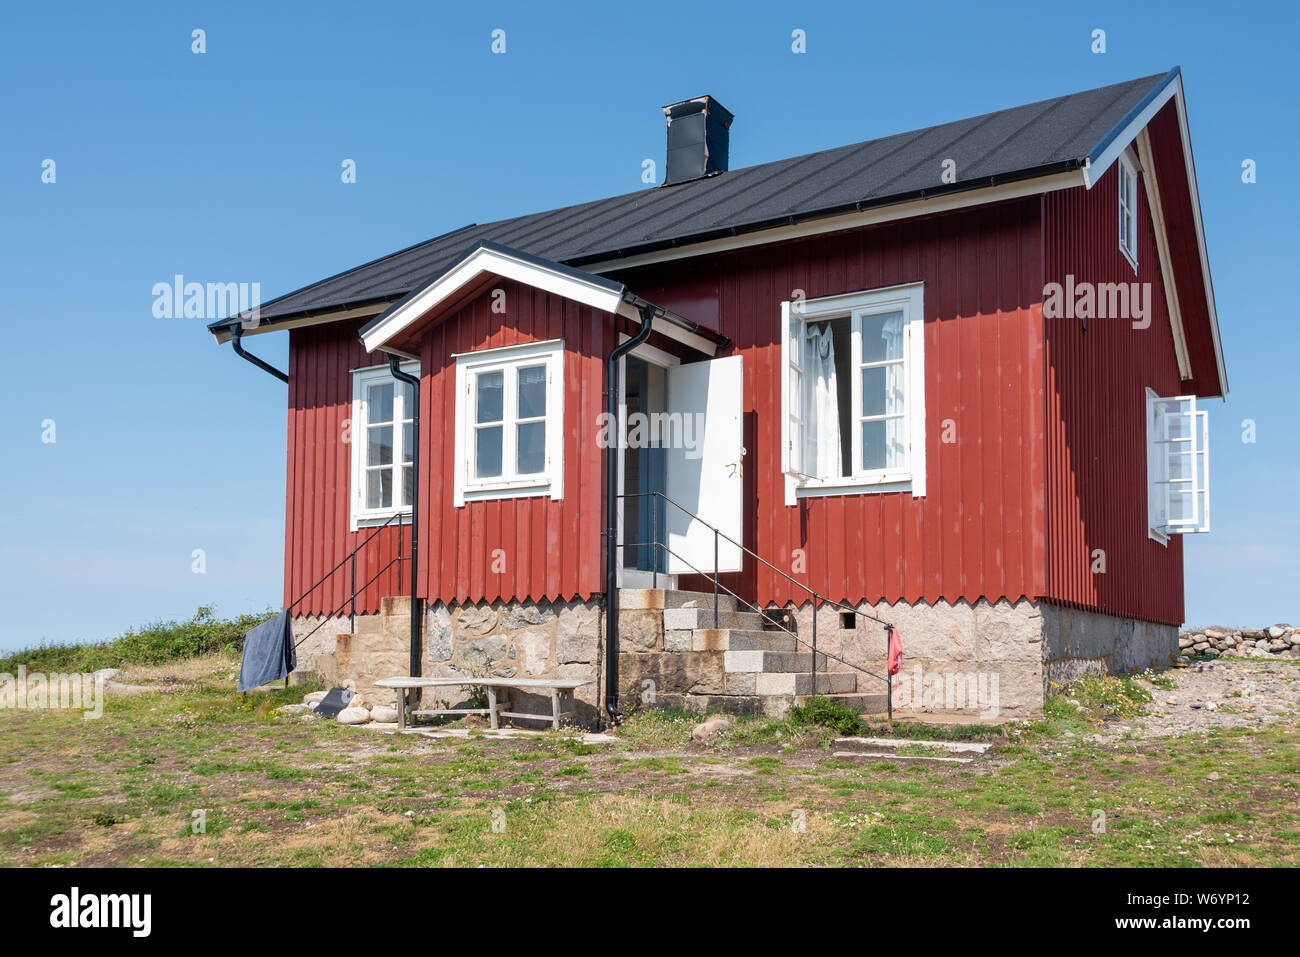 Ursholmen, Sweden - July 26, 2019: View of the red houses on Ursholmen Island in the Swedish Kosterhavet National Park in western Sweden. Stock Photo